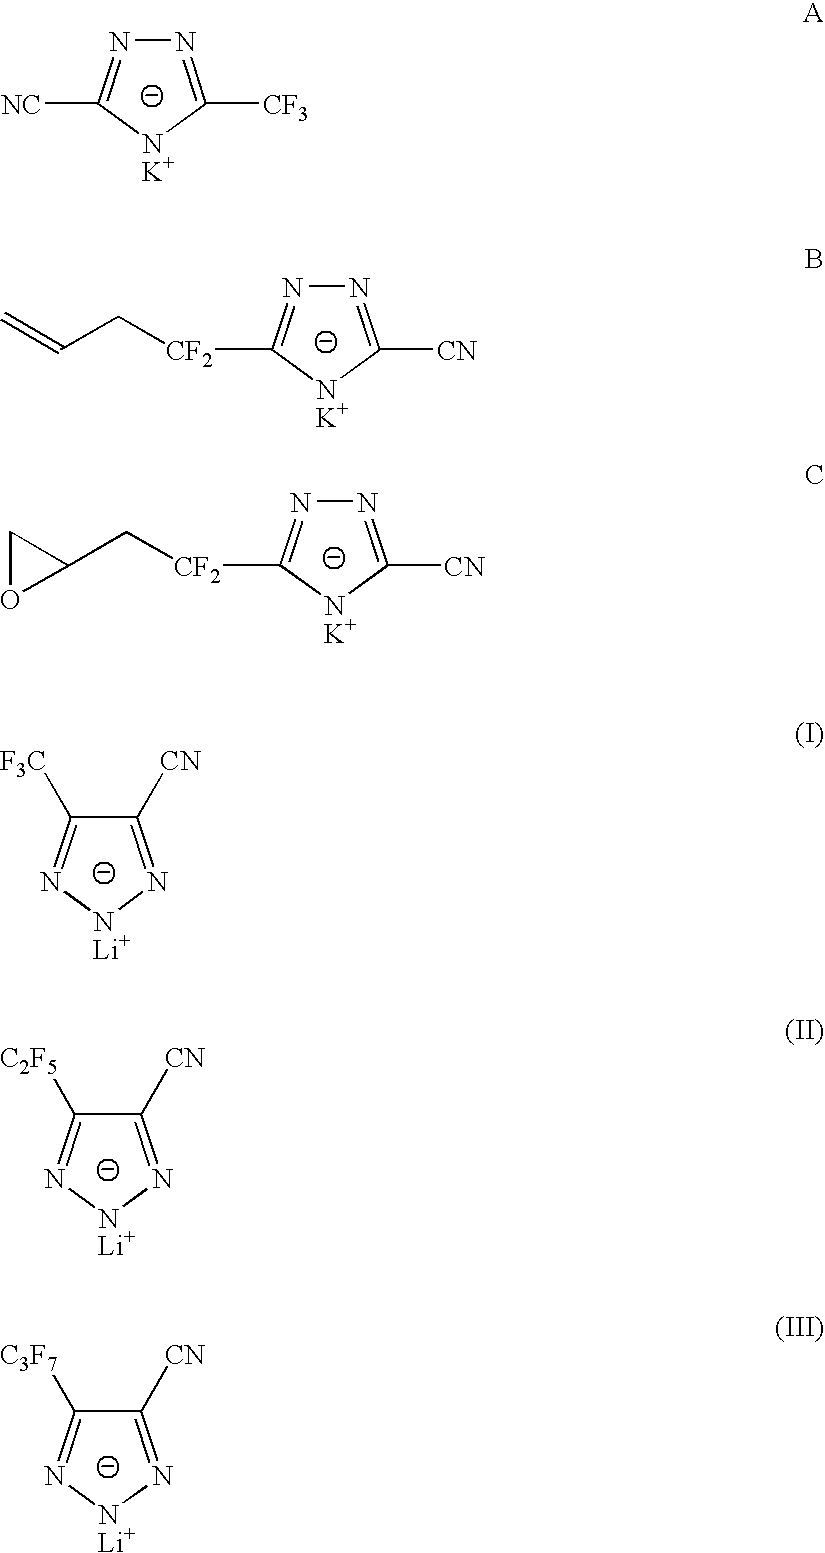 Sulphonyl-1,2,4-triazole salts